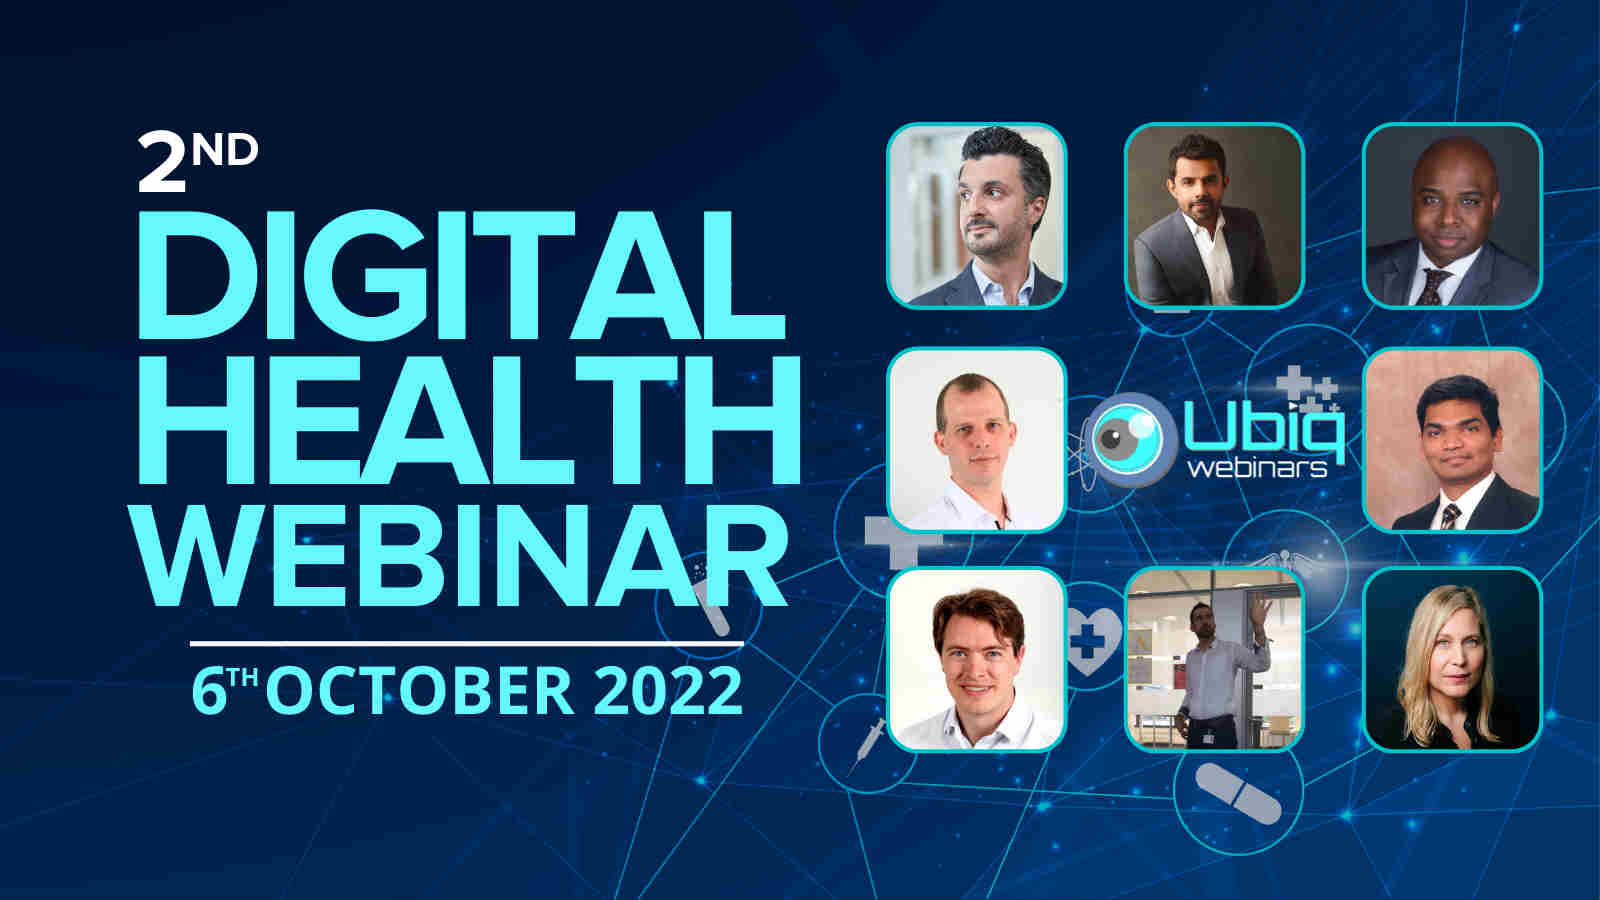 2nd Digital Health Webinar